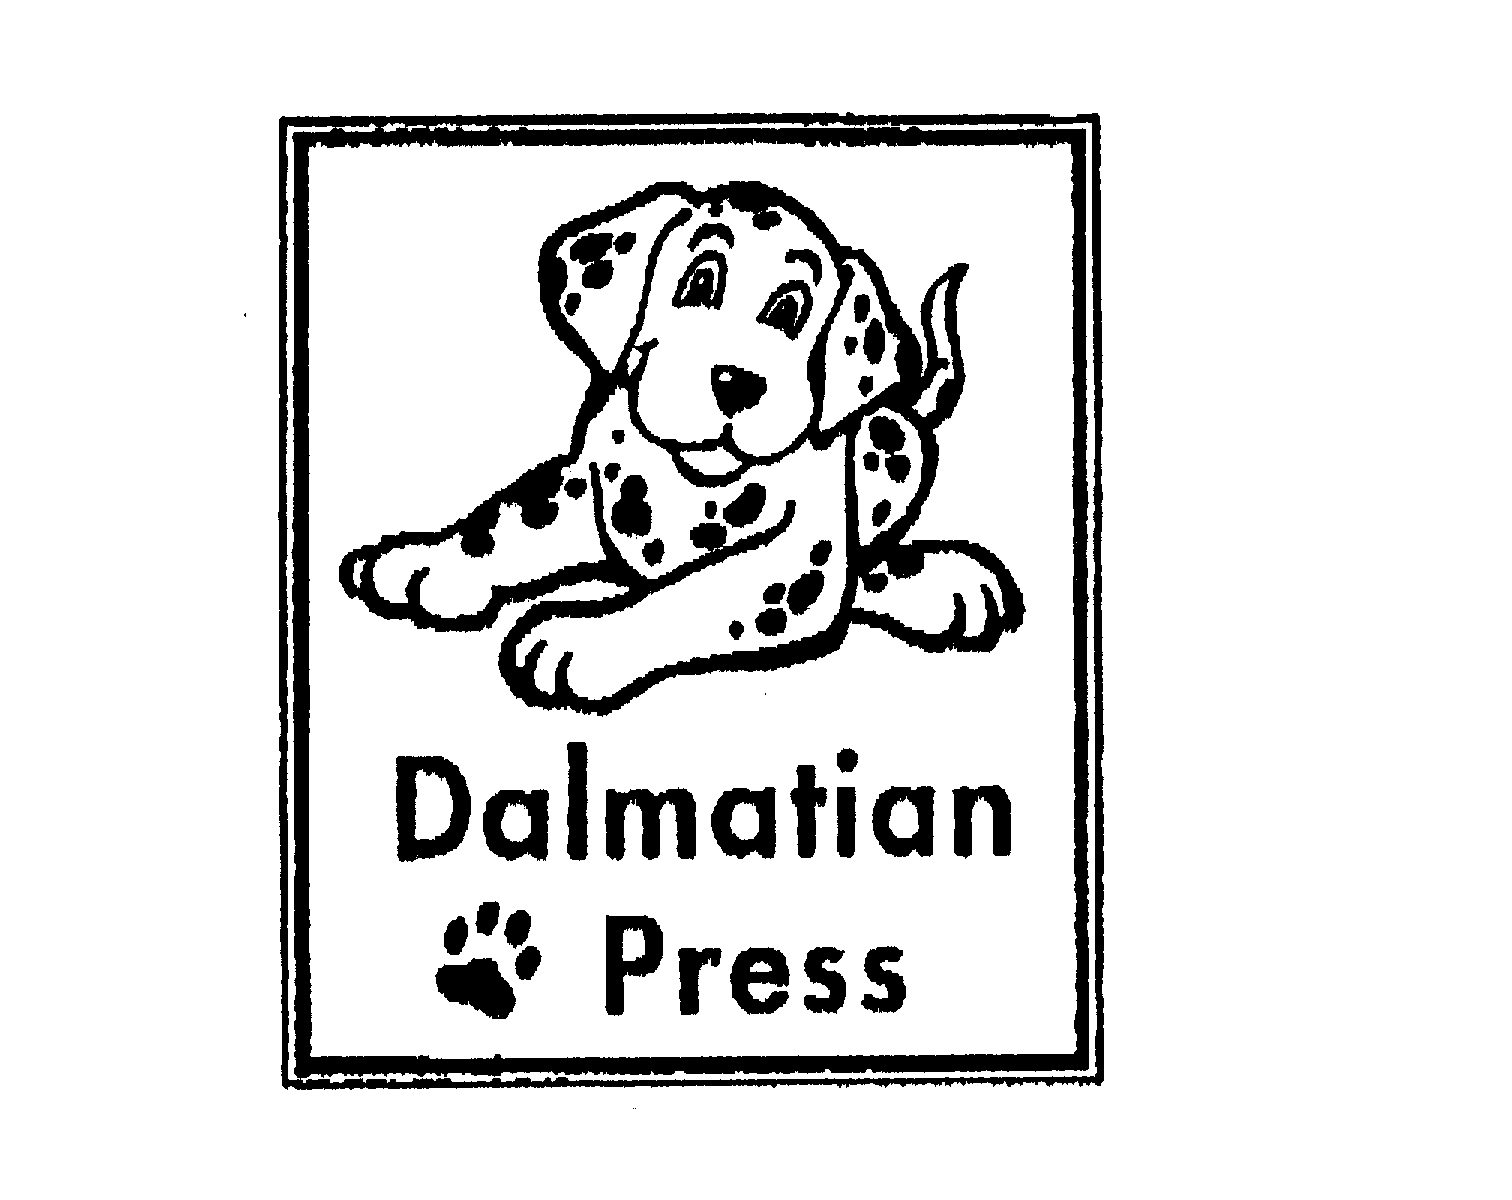 DALMATIAN PRESS